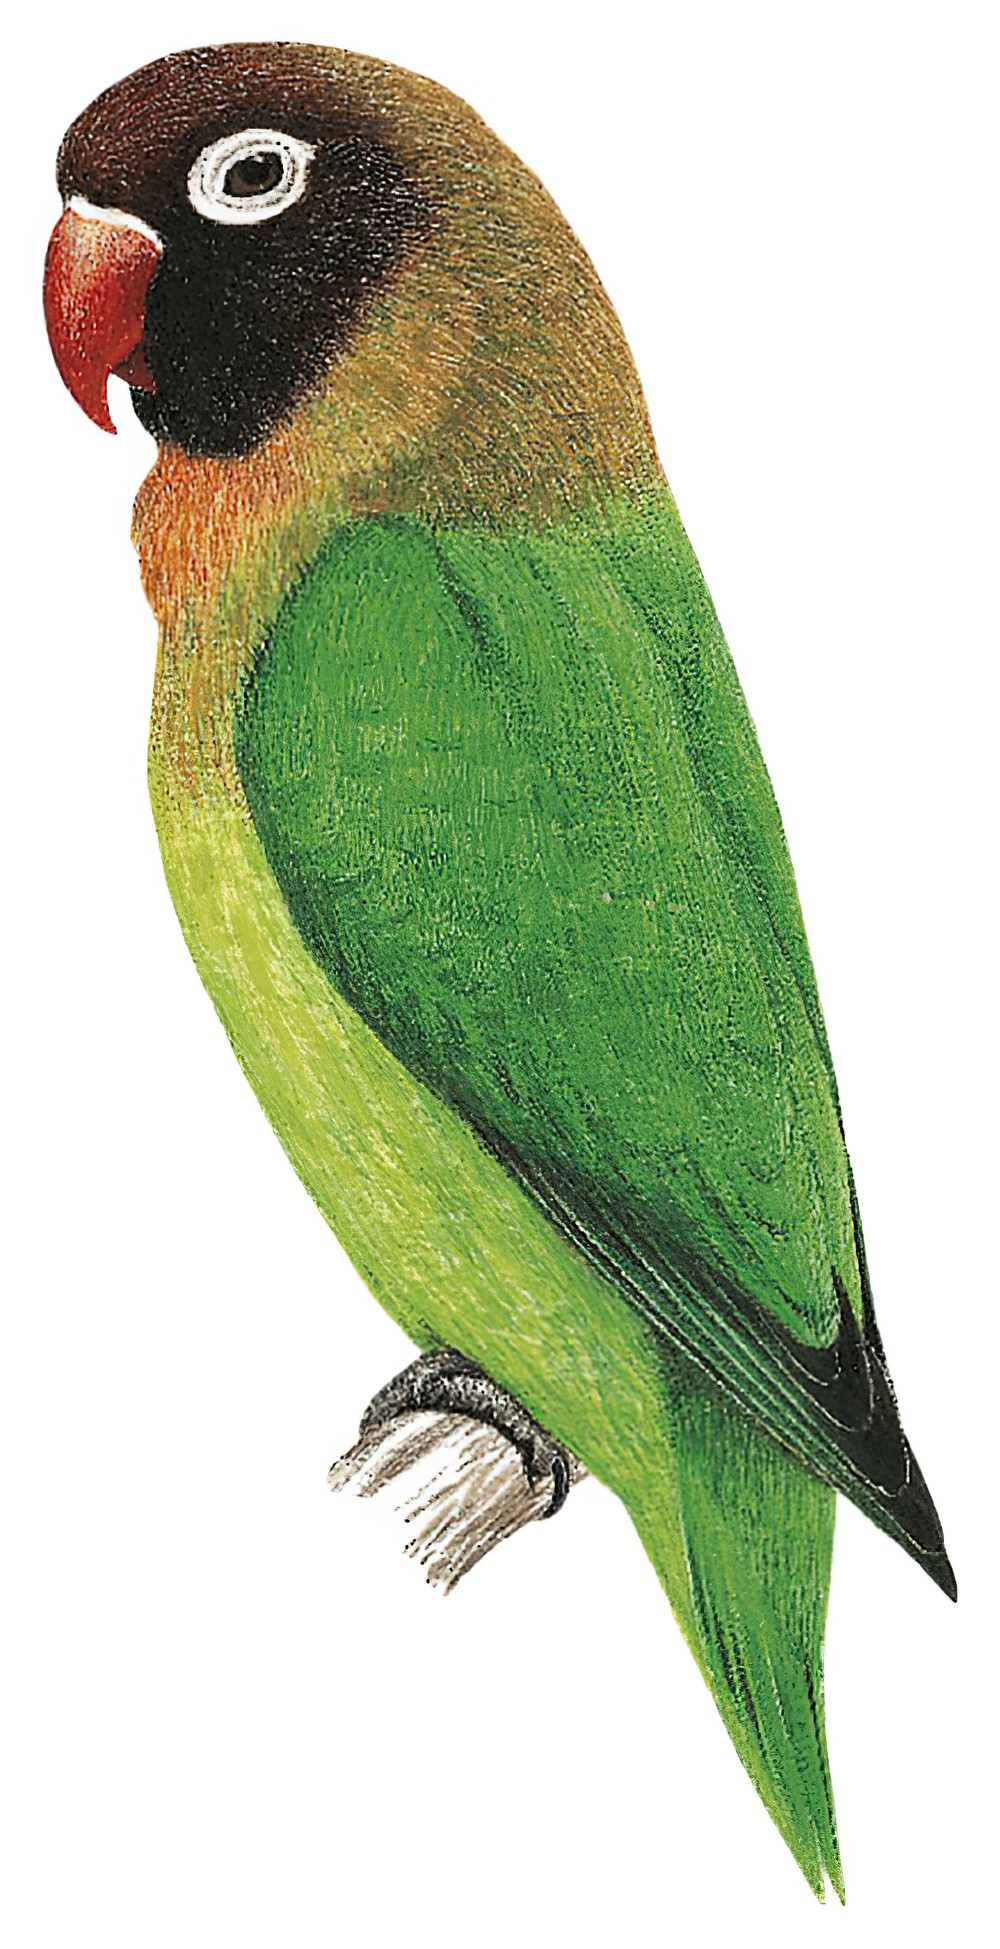 Black-cheeked Lovebird / Agapornis nigrigenis